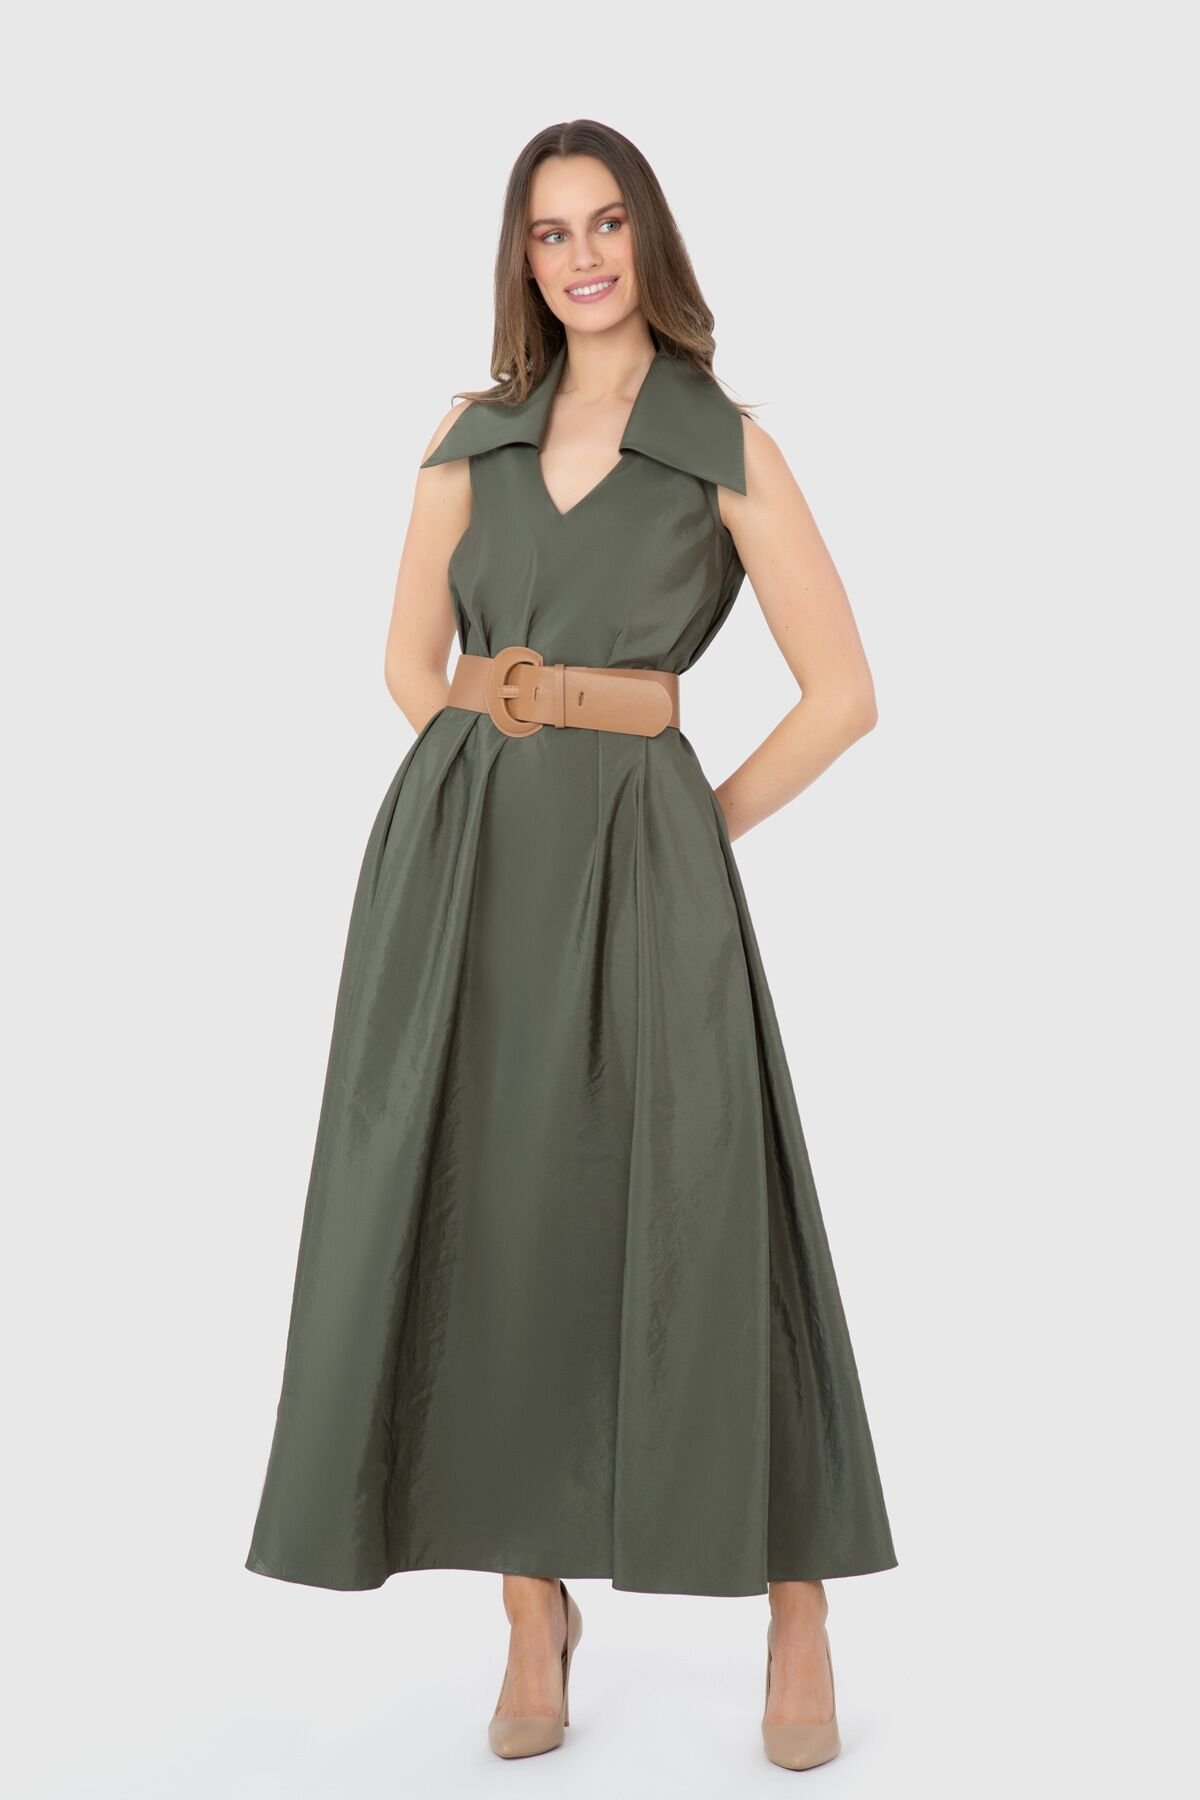 Belted Wide Collar Long Green Dress